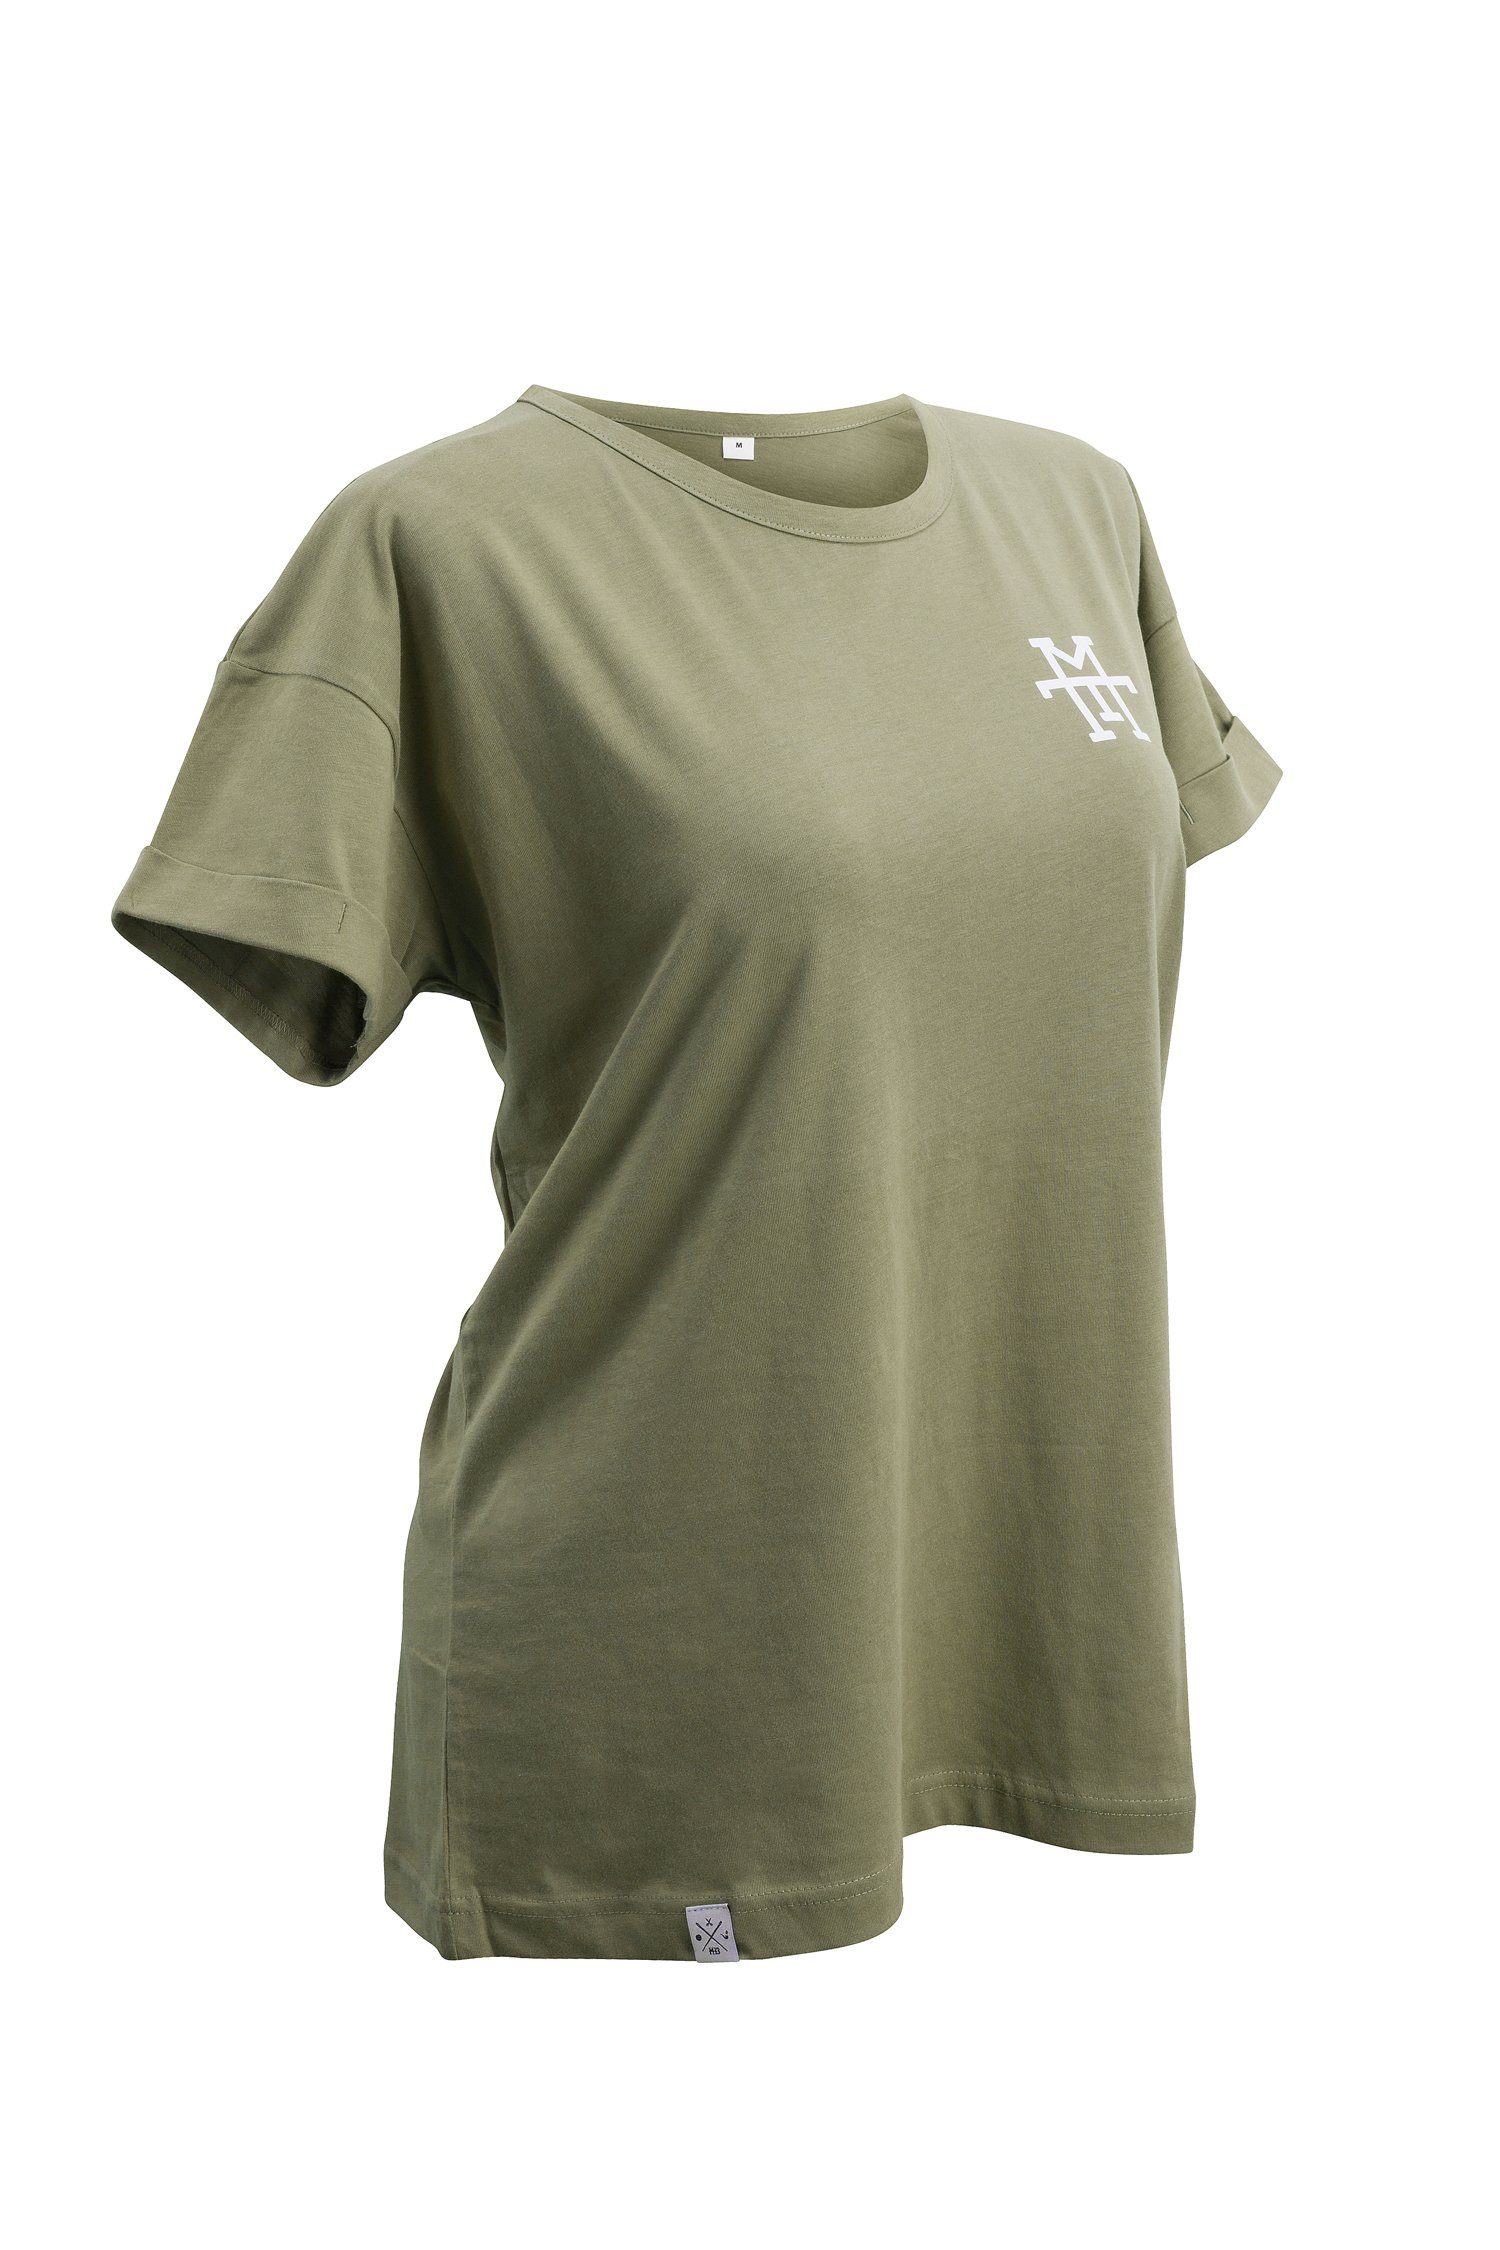 Manufaktur13 T-Shirt Boyfriend T-Shirt Oversize 100% - Olive Baumwolle T-Shirt